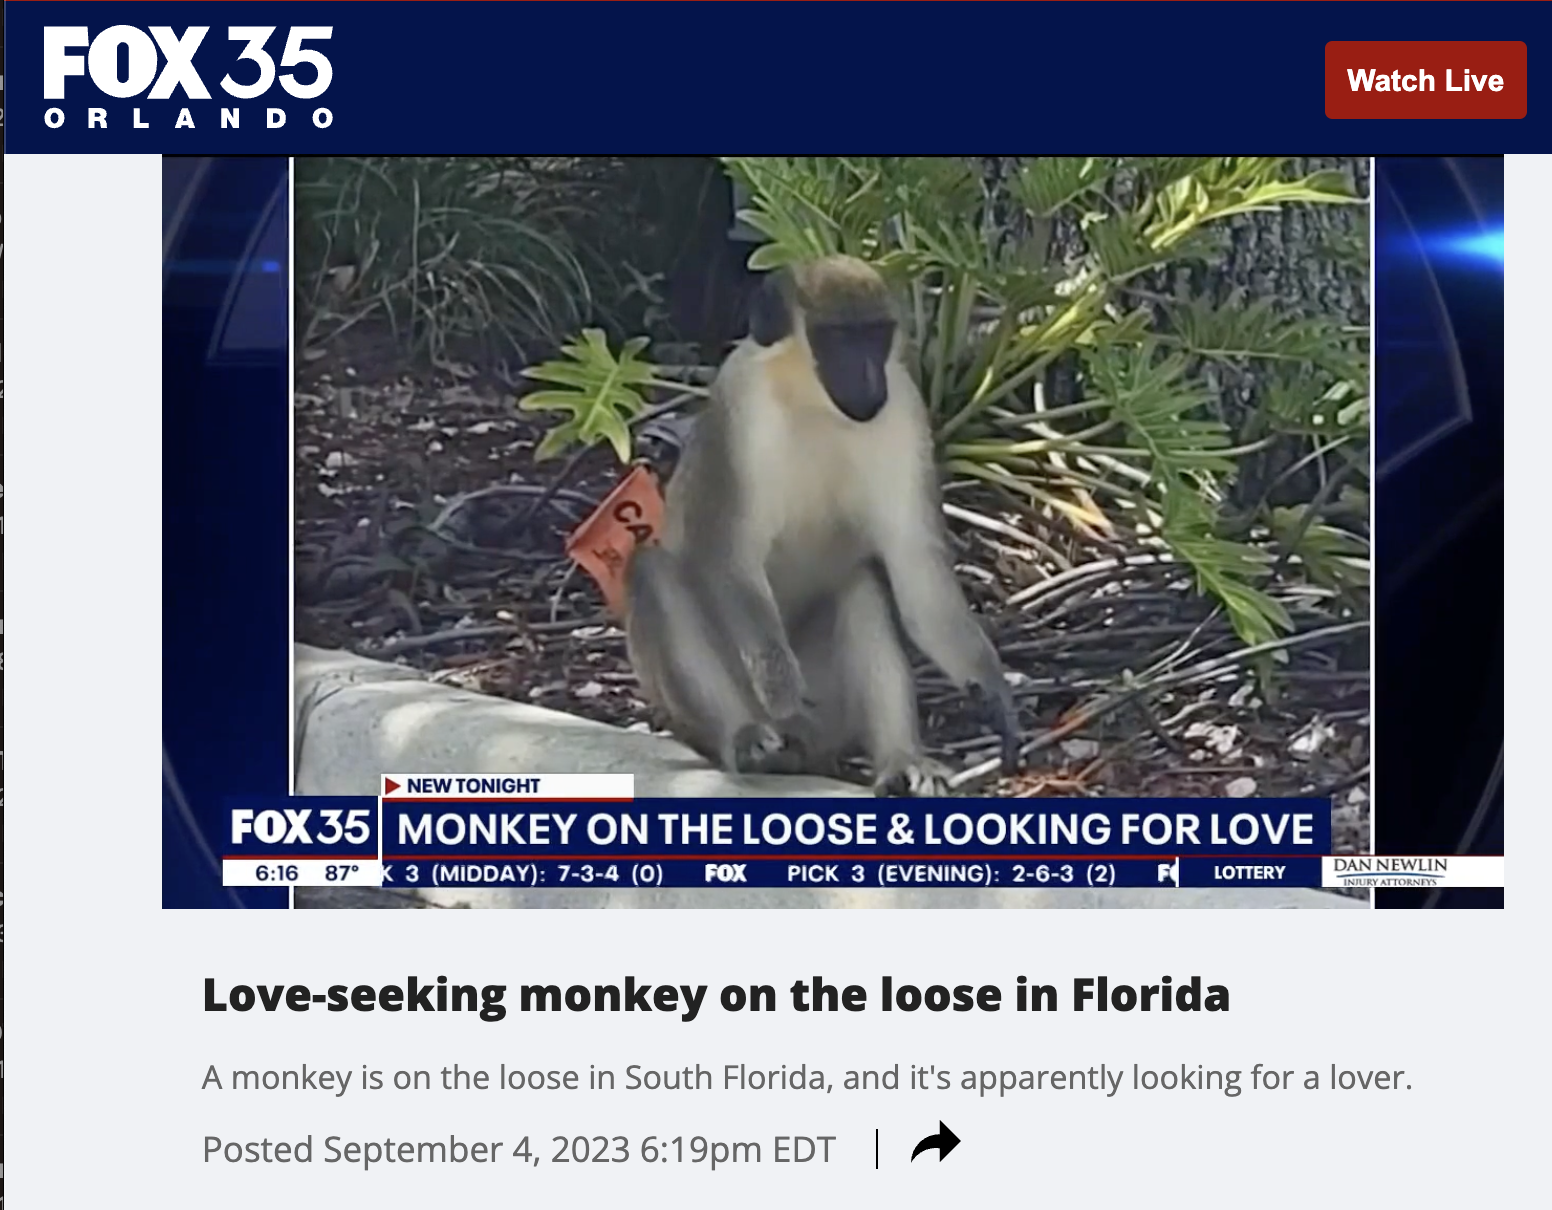 ninja joe monkey - Fox 35 Orlando Watch Live New Tonight Fox 35 Monkey On The Loose & Looking For Love 87 3 Midday 734 0 Fox Pick 3 Evening 263 2 Flottery Loveseeking monkey on the loose in Florida Dan Newlin A monkey is on the loose in South Florida, and